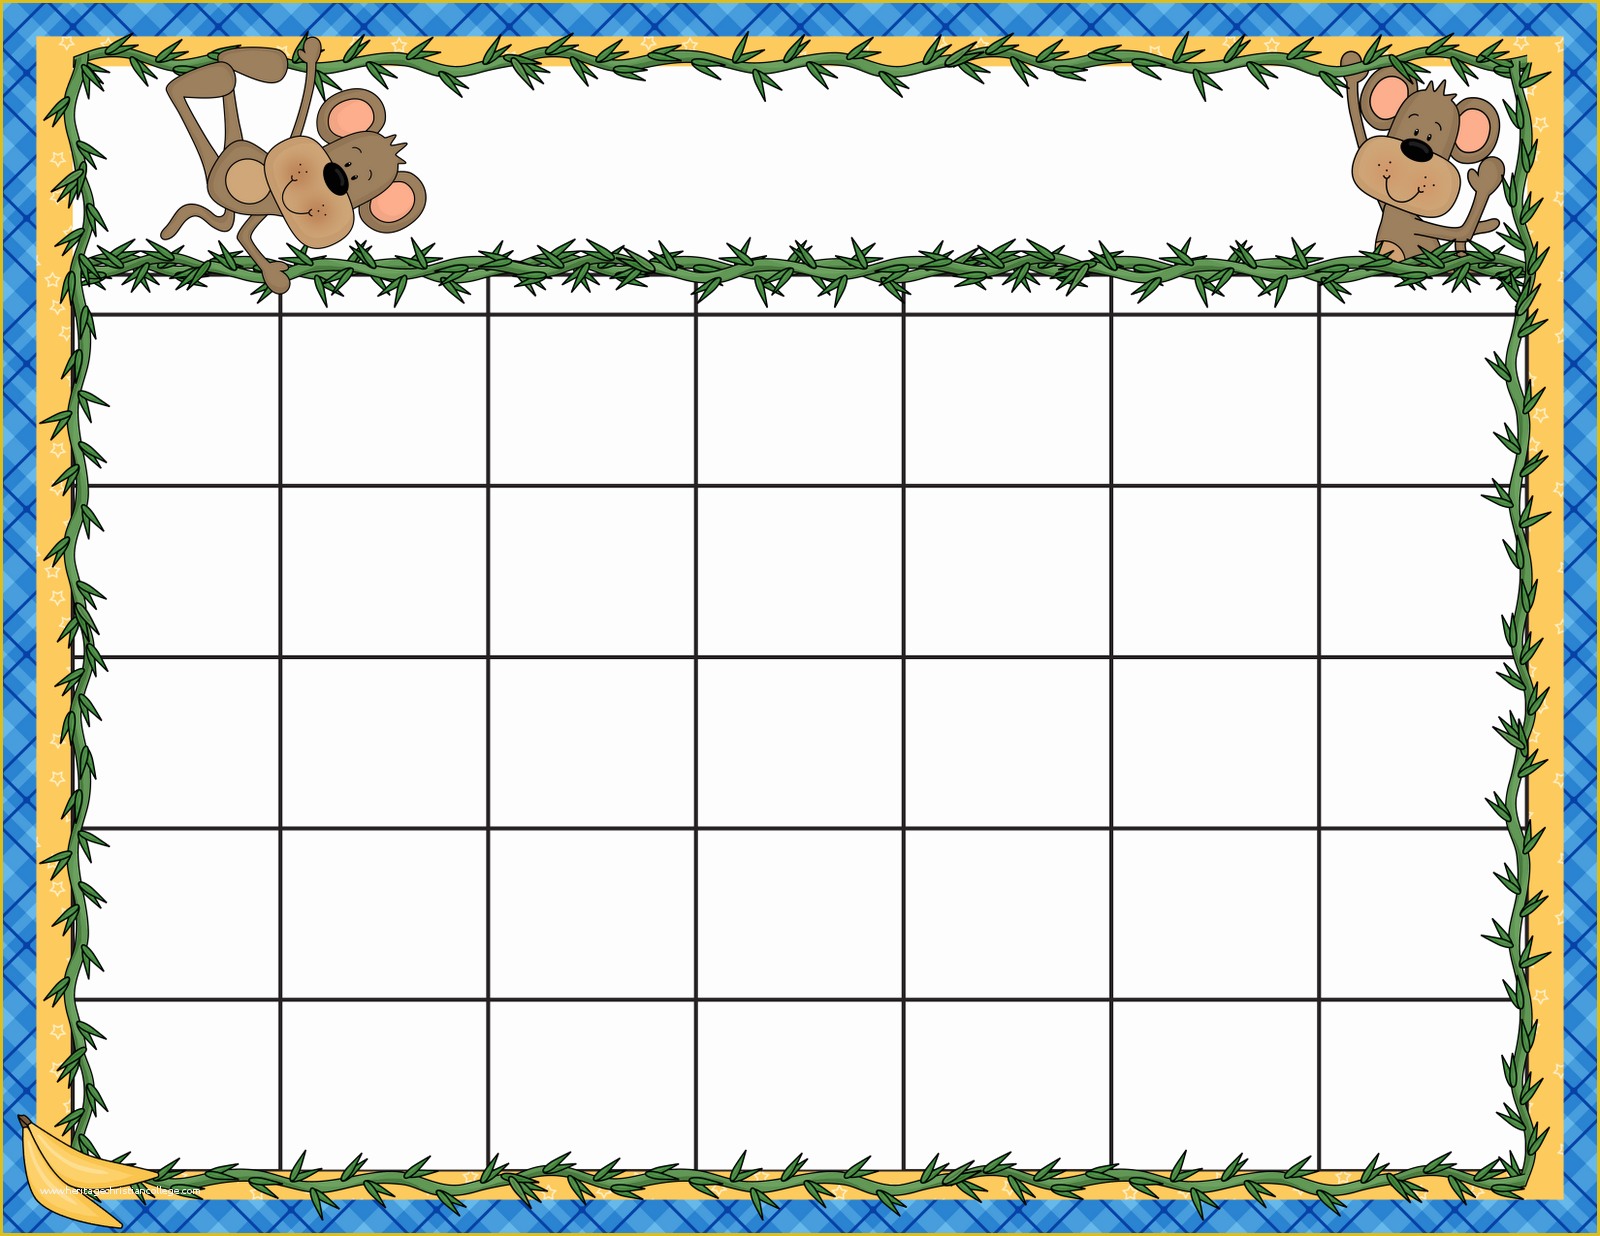 Free Preschool Calendar Templates 2018 Of Preschool Calendar Clipart Heritagechristiancollege